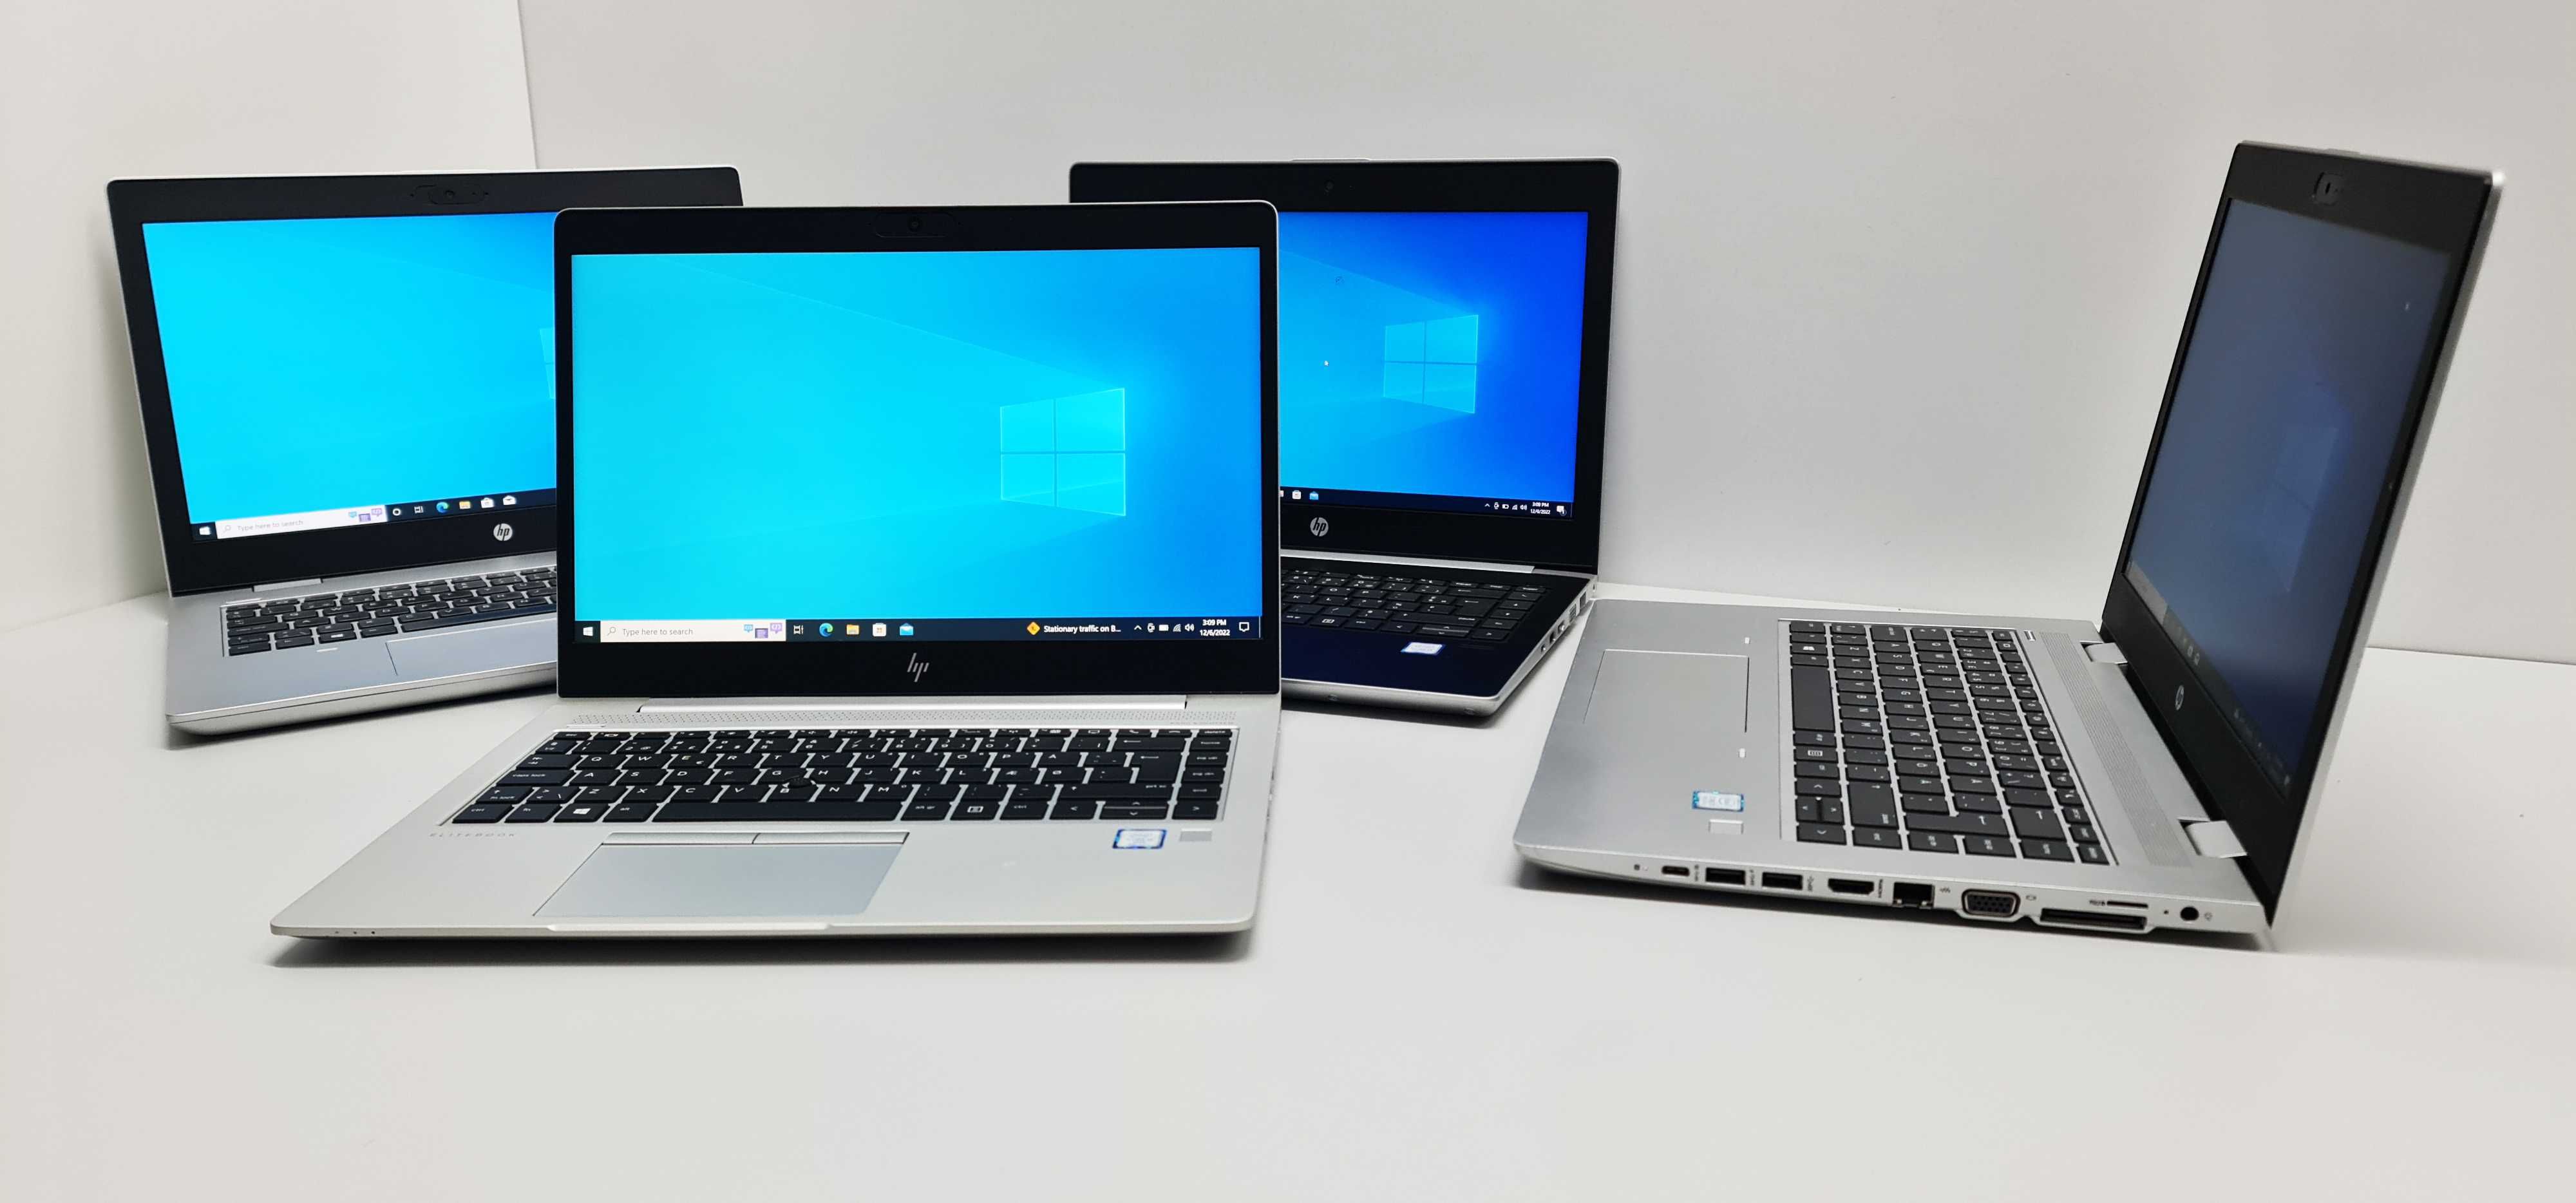 Laptopuri cu garantie, testate, cu revizie termica facuta, configurate